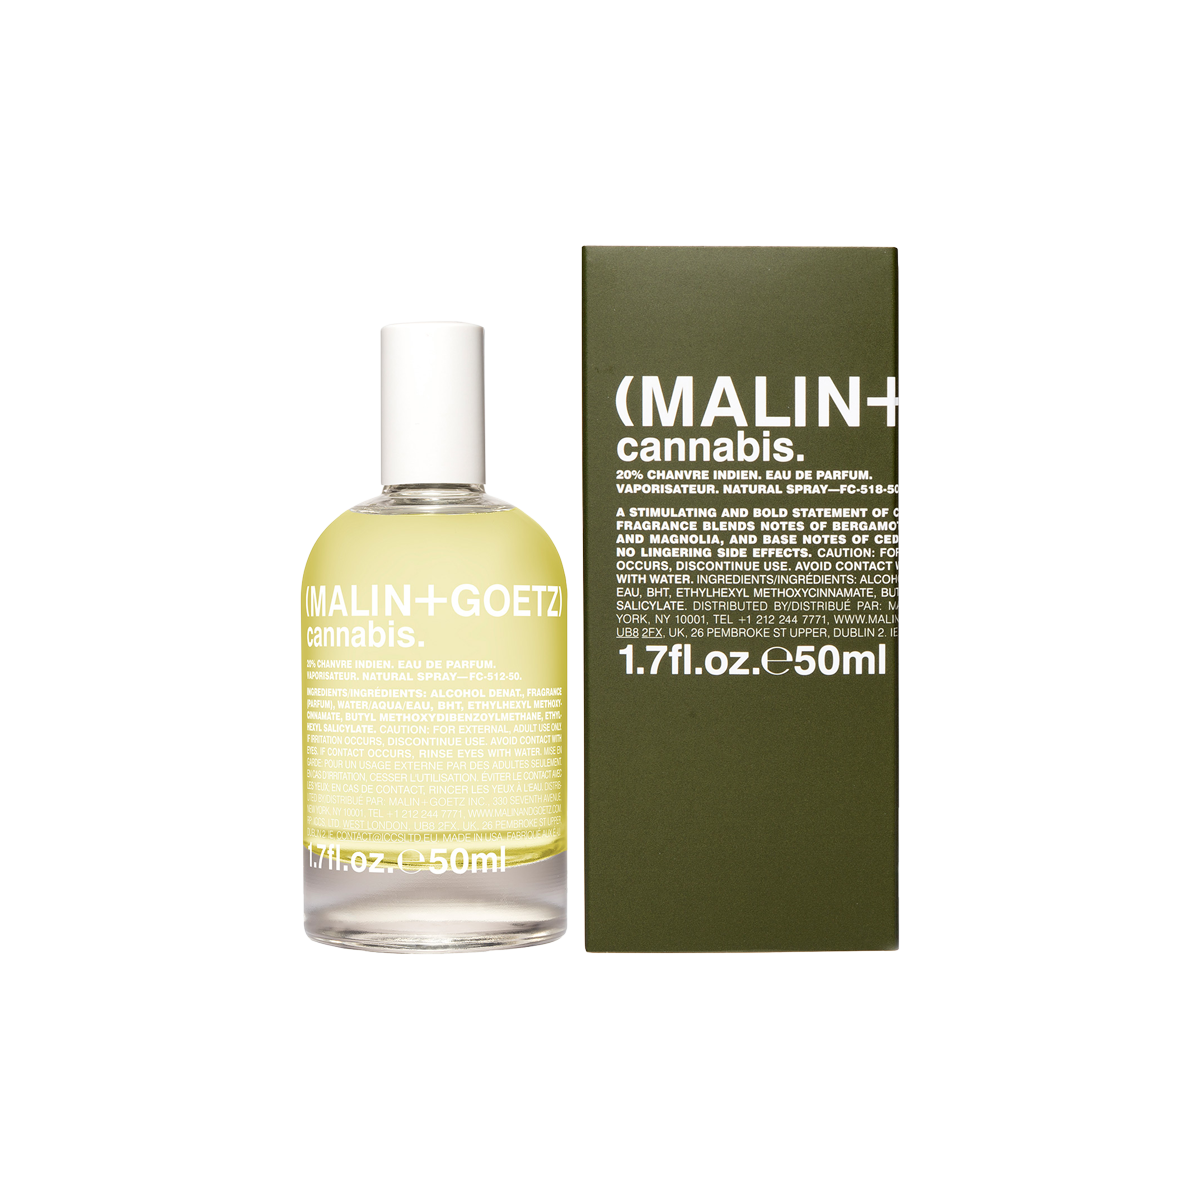 MALIN+GOETZ - Cannabis Eau de Parfum